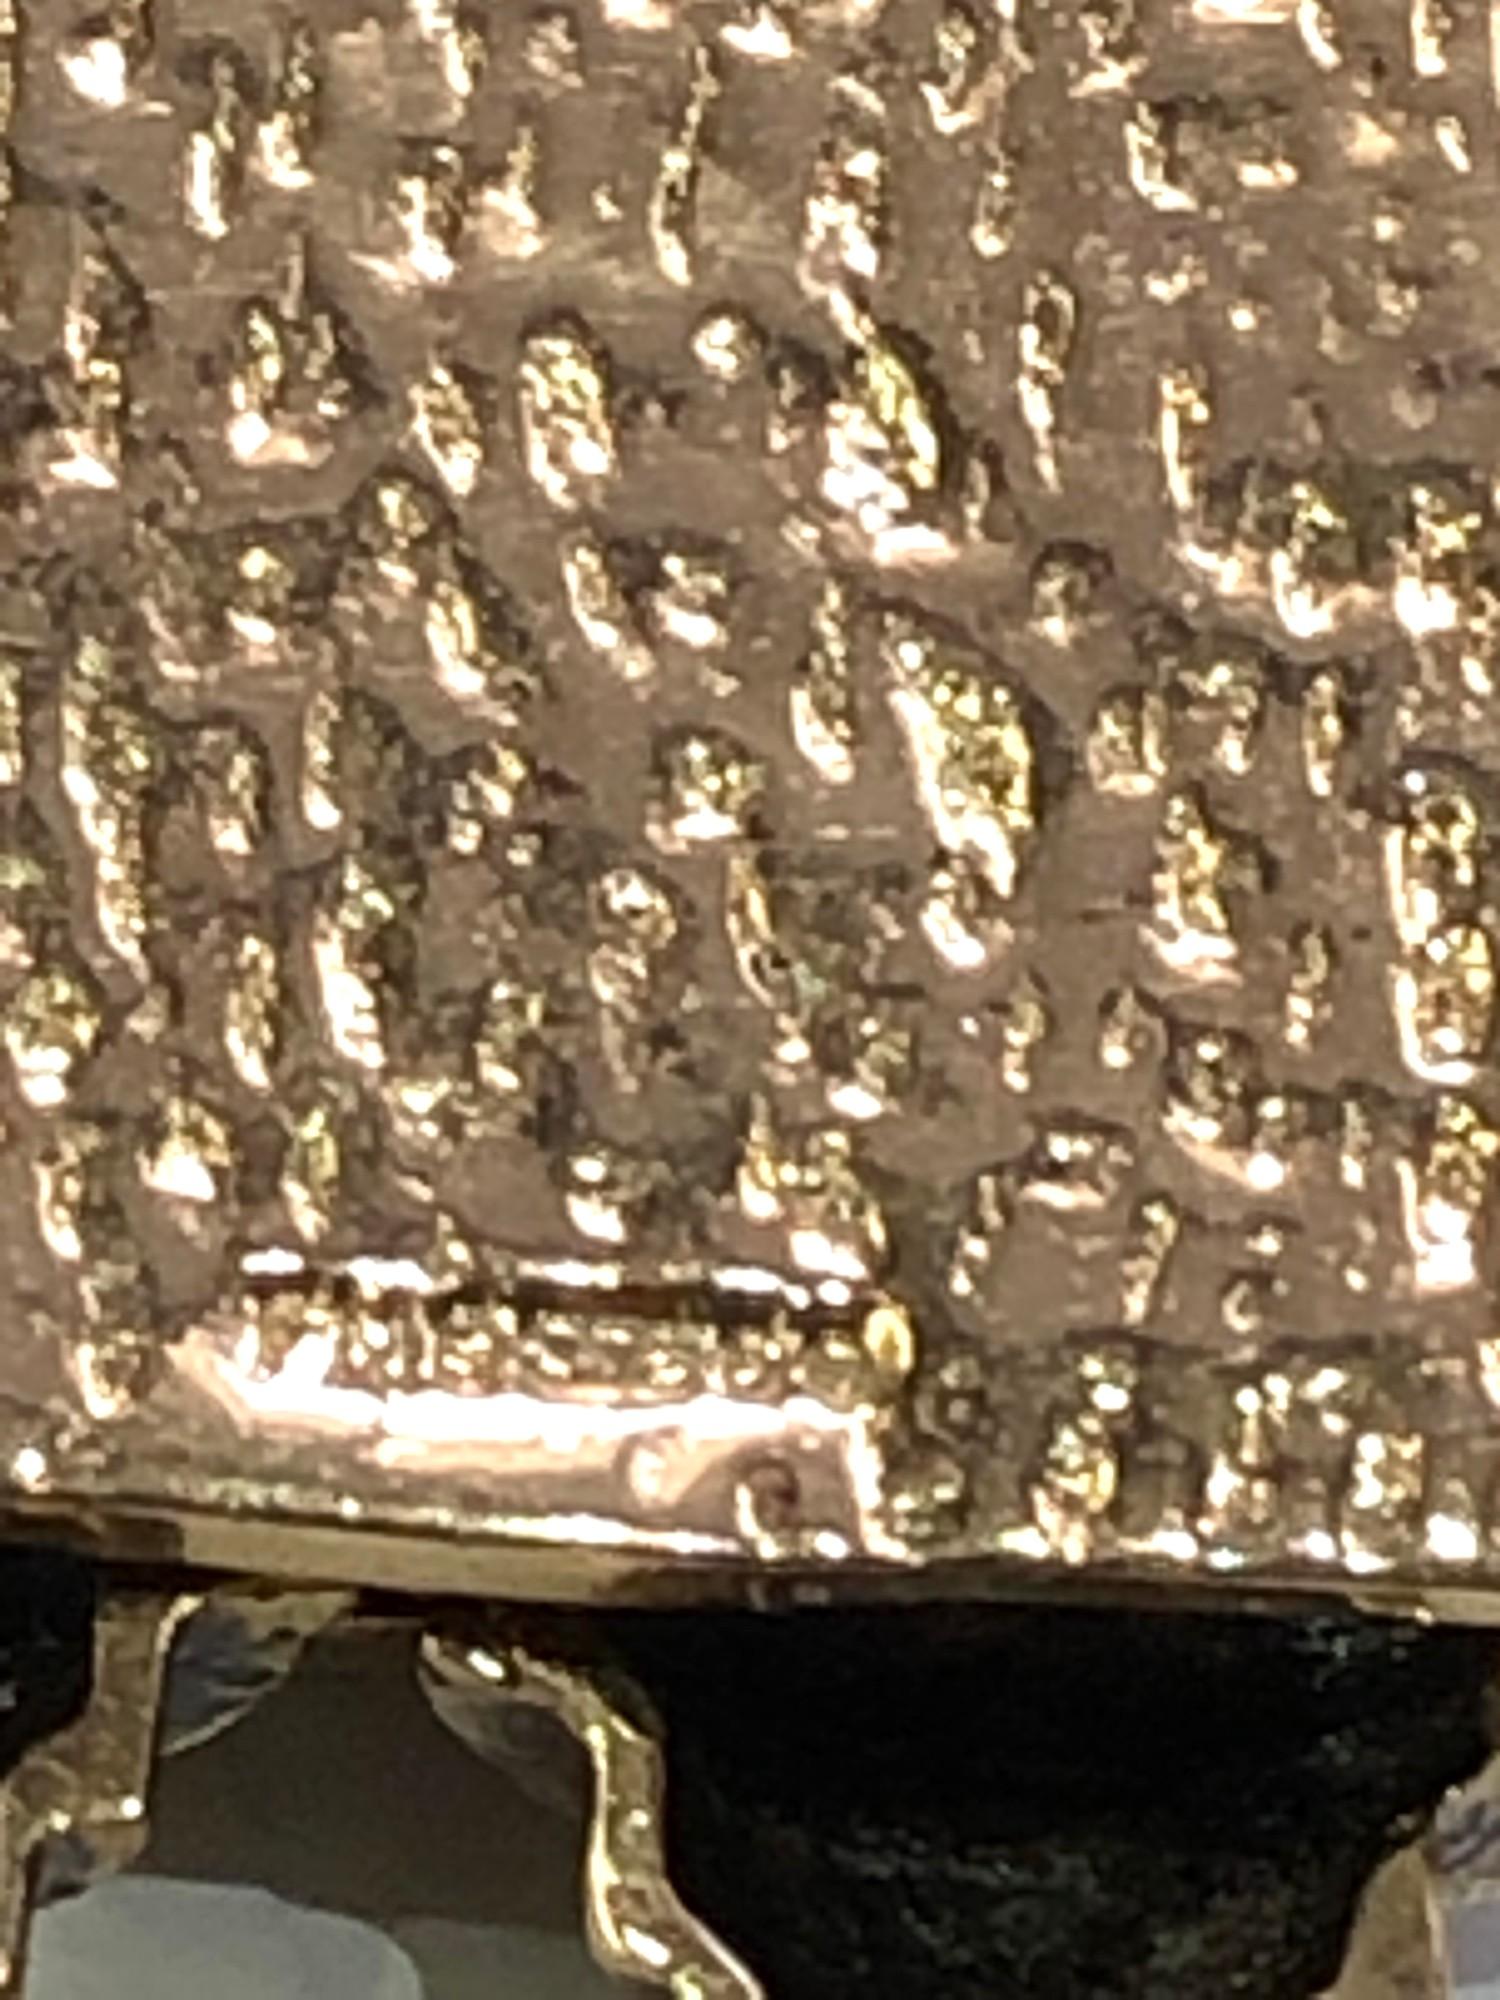 Heavy 9ct gold ornate Jewish pendant weight 15.3g - Image 4 of 4